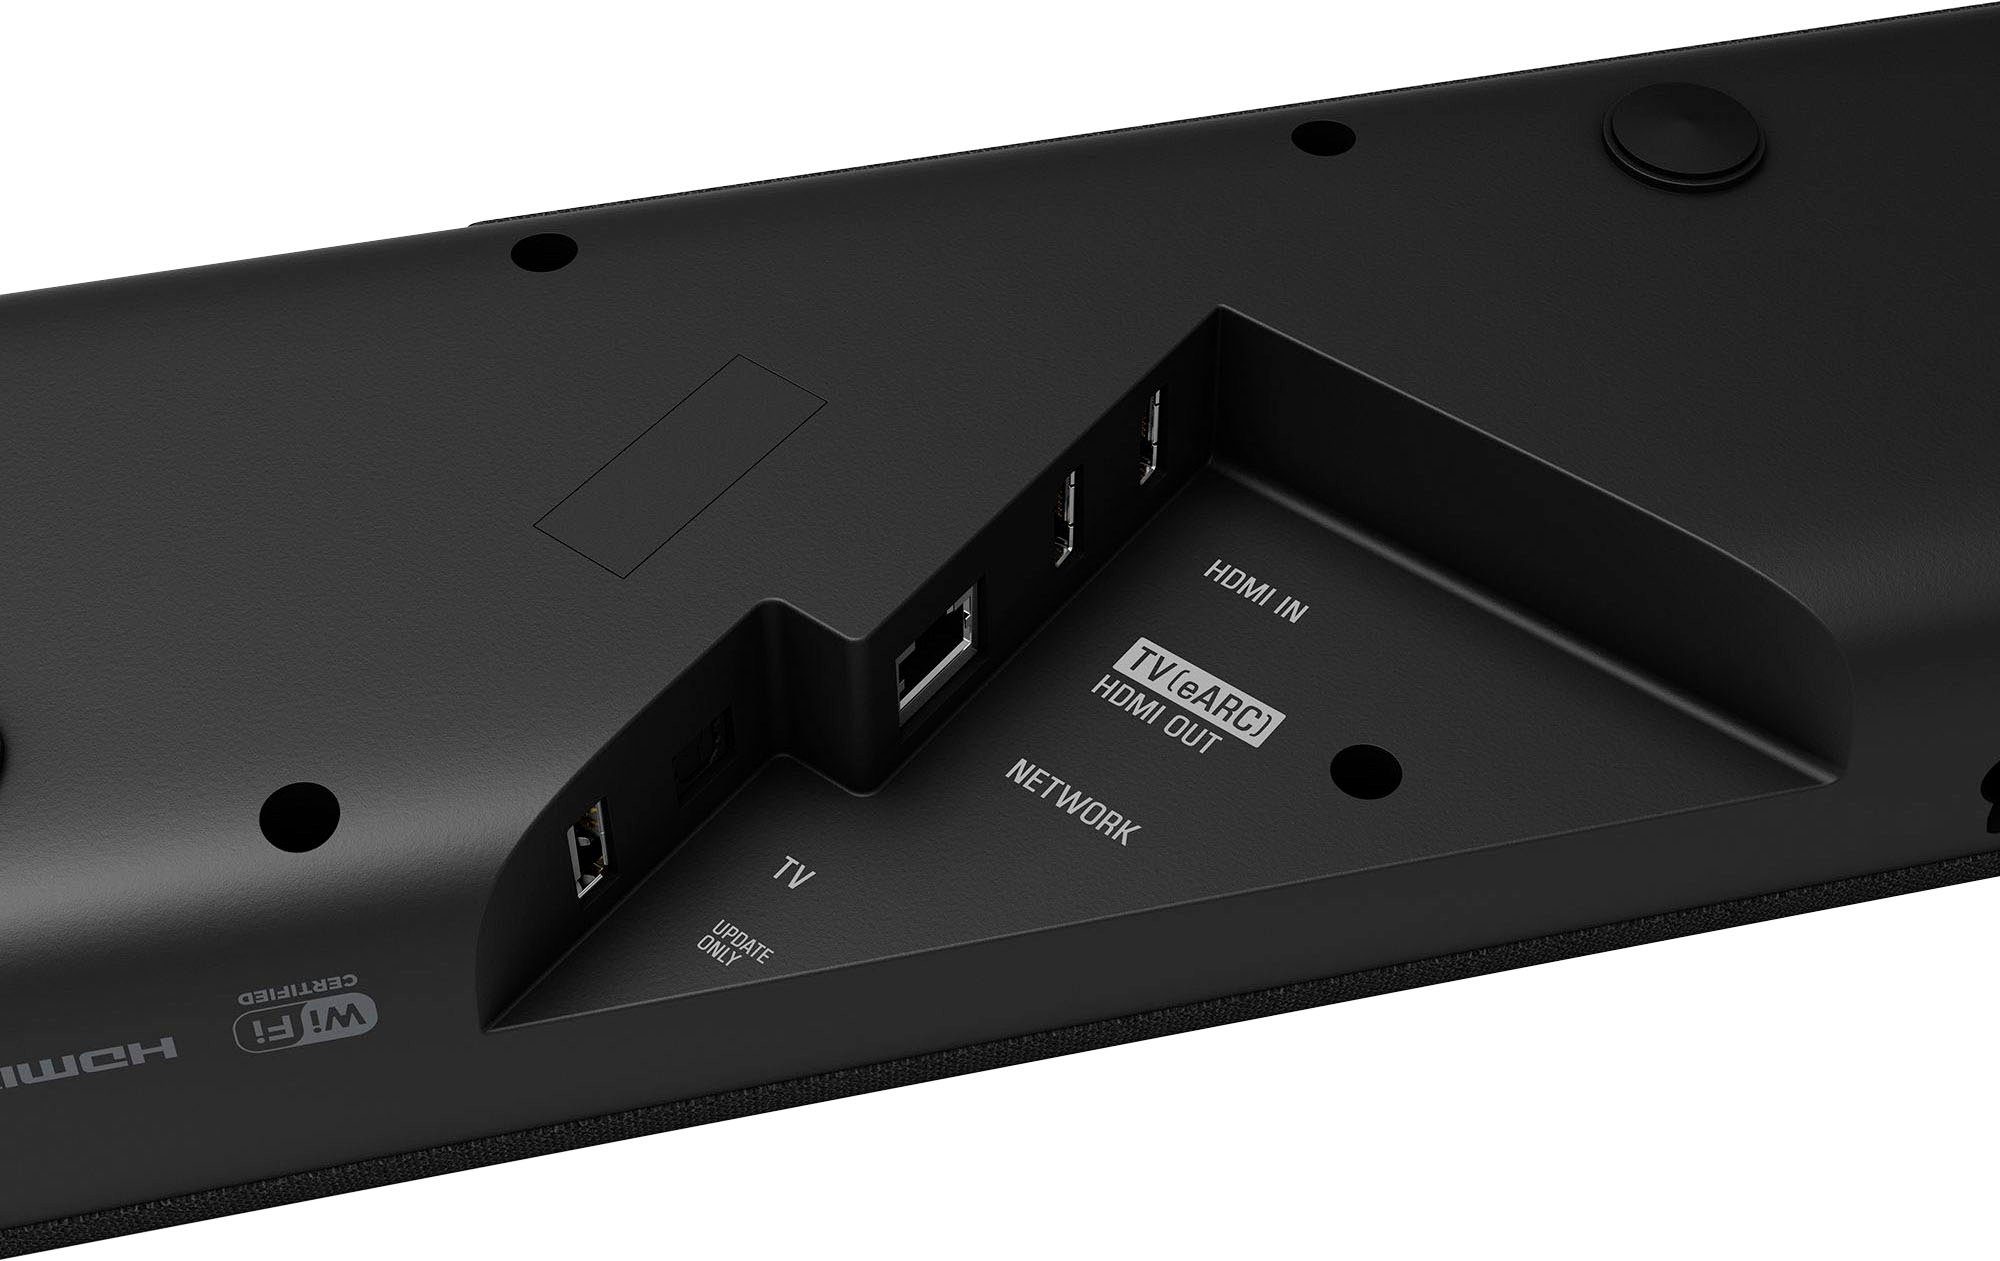 Soundbar 180 TRUE Stereo 40A BAR Subwoofer) WLAN X Yamaha schwarz integriertem (Bluetooth, mit W, (WiFi),